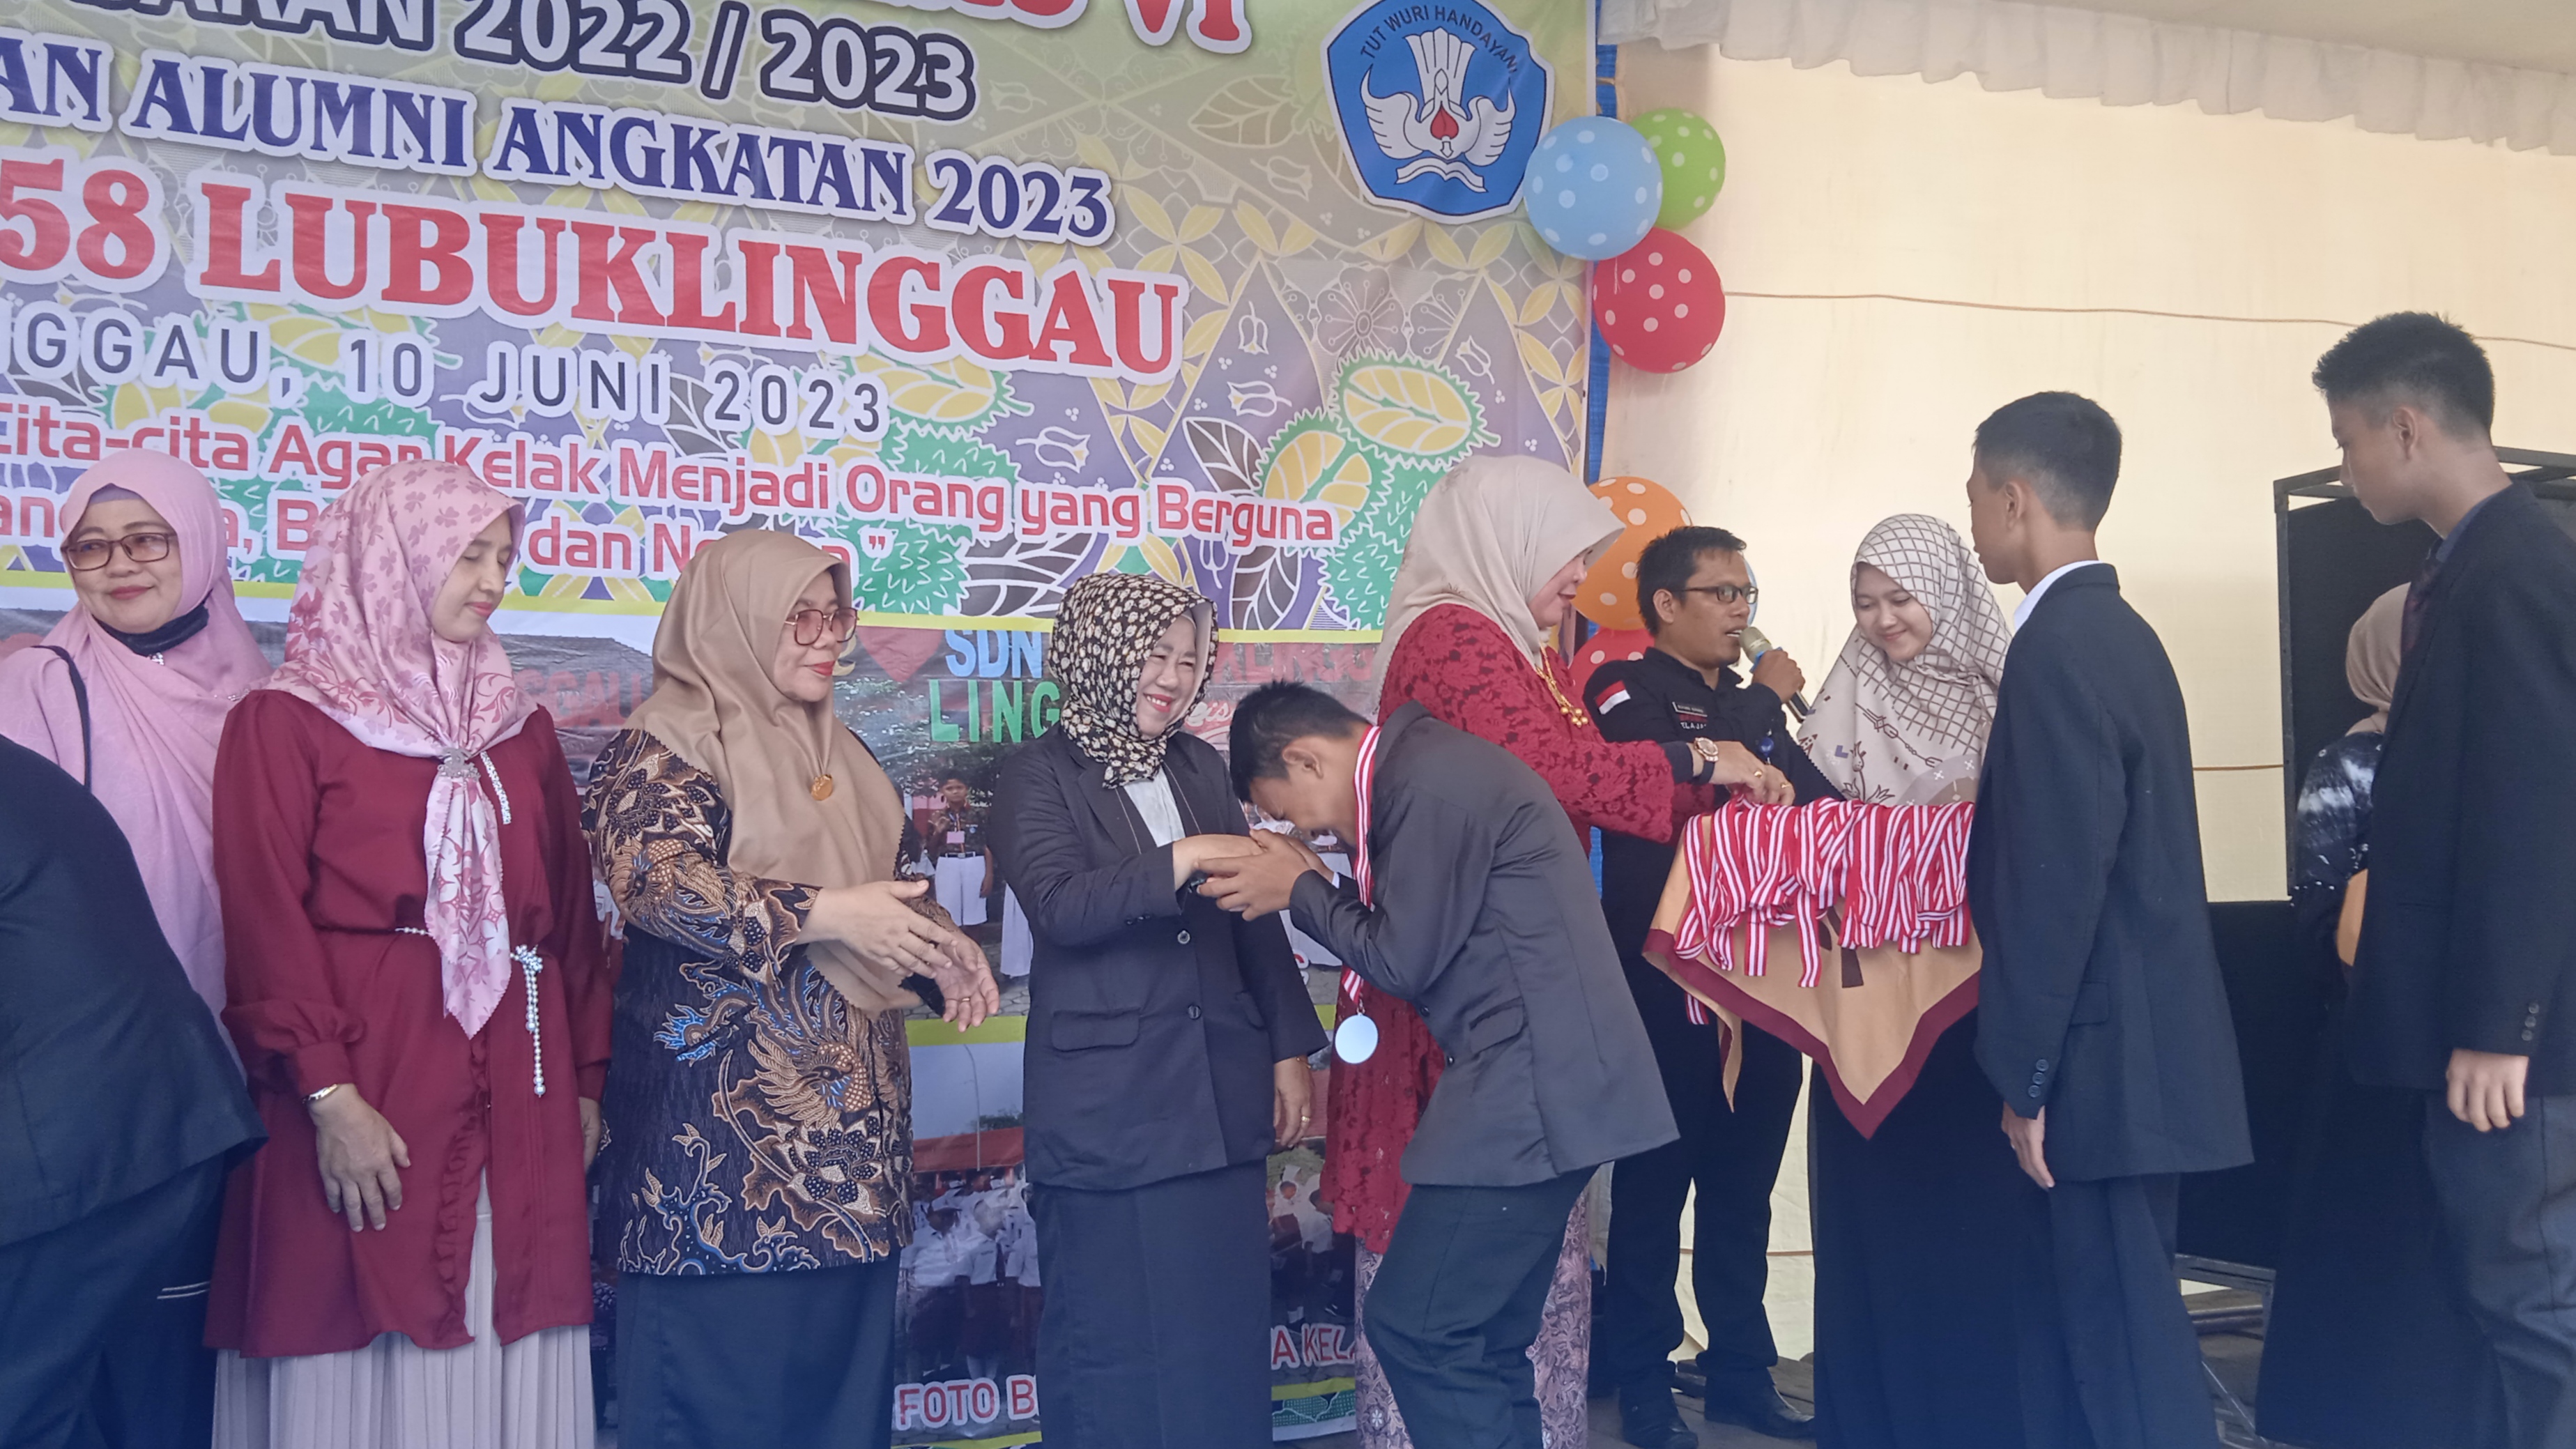 Pelepasan dan Pengukuhan Alumni Angkatan 2023 SD Negeri 58 Lubuklinggau Sukses Digelar